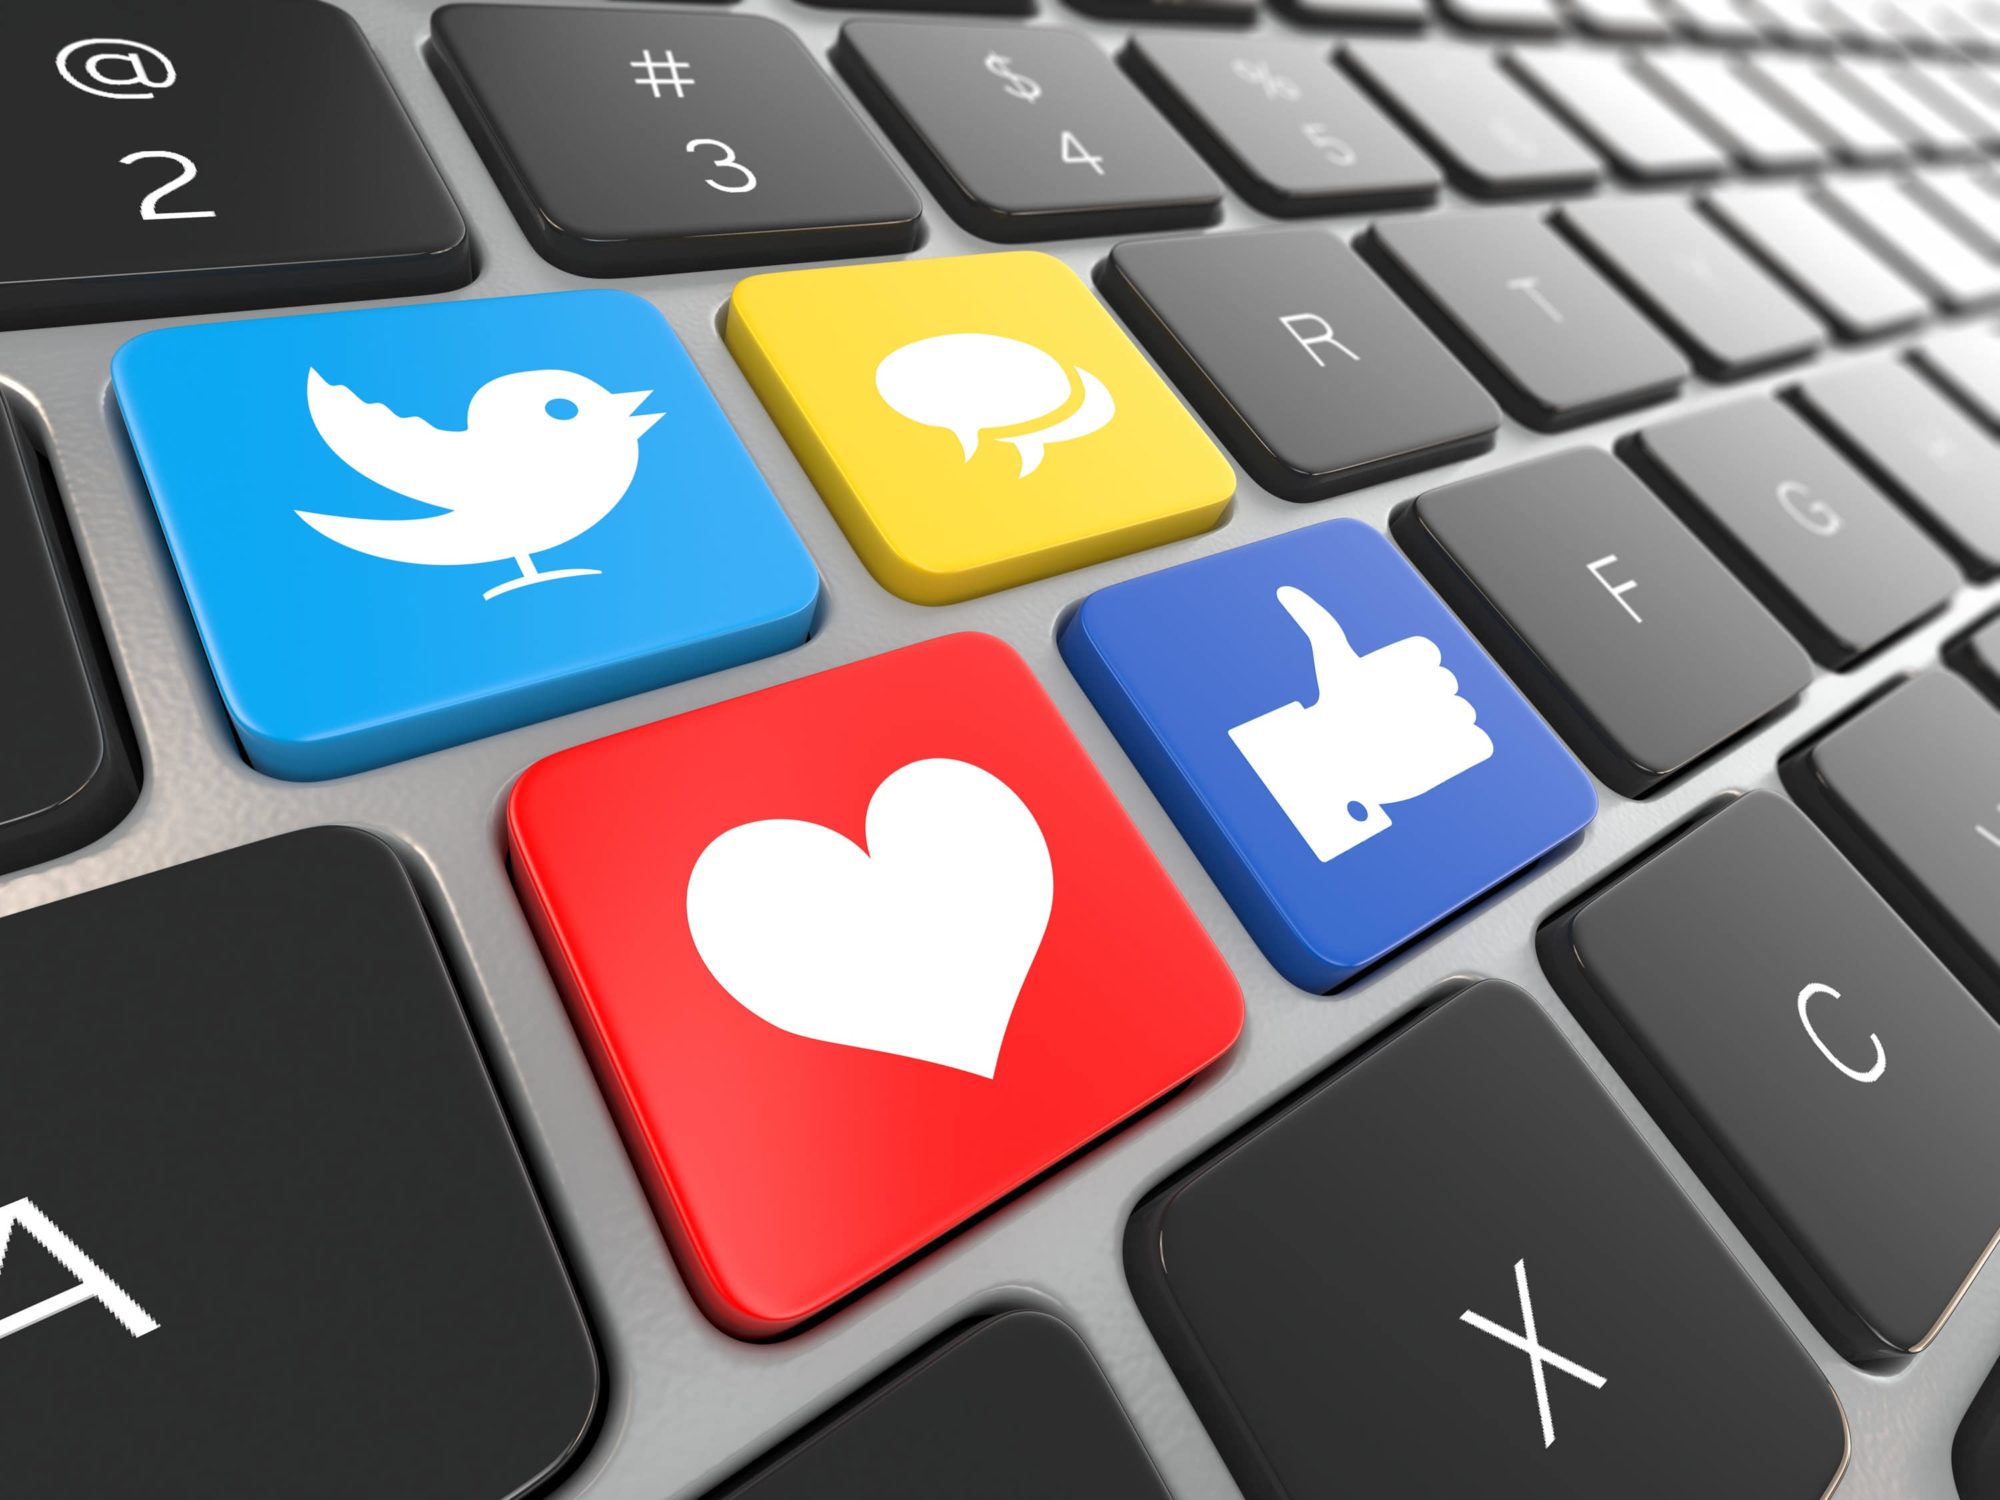 Abstract image of social media logos on keyboard.